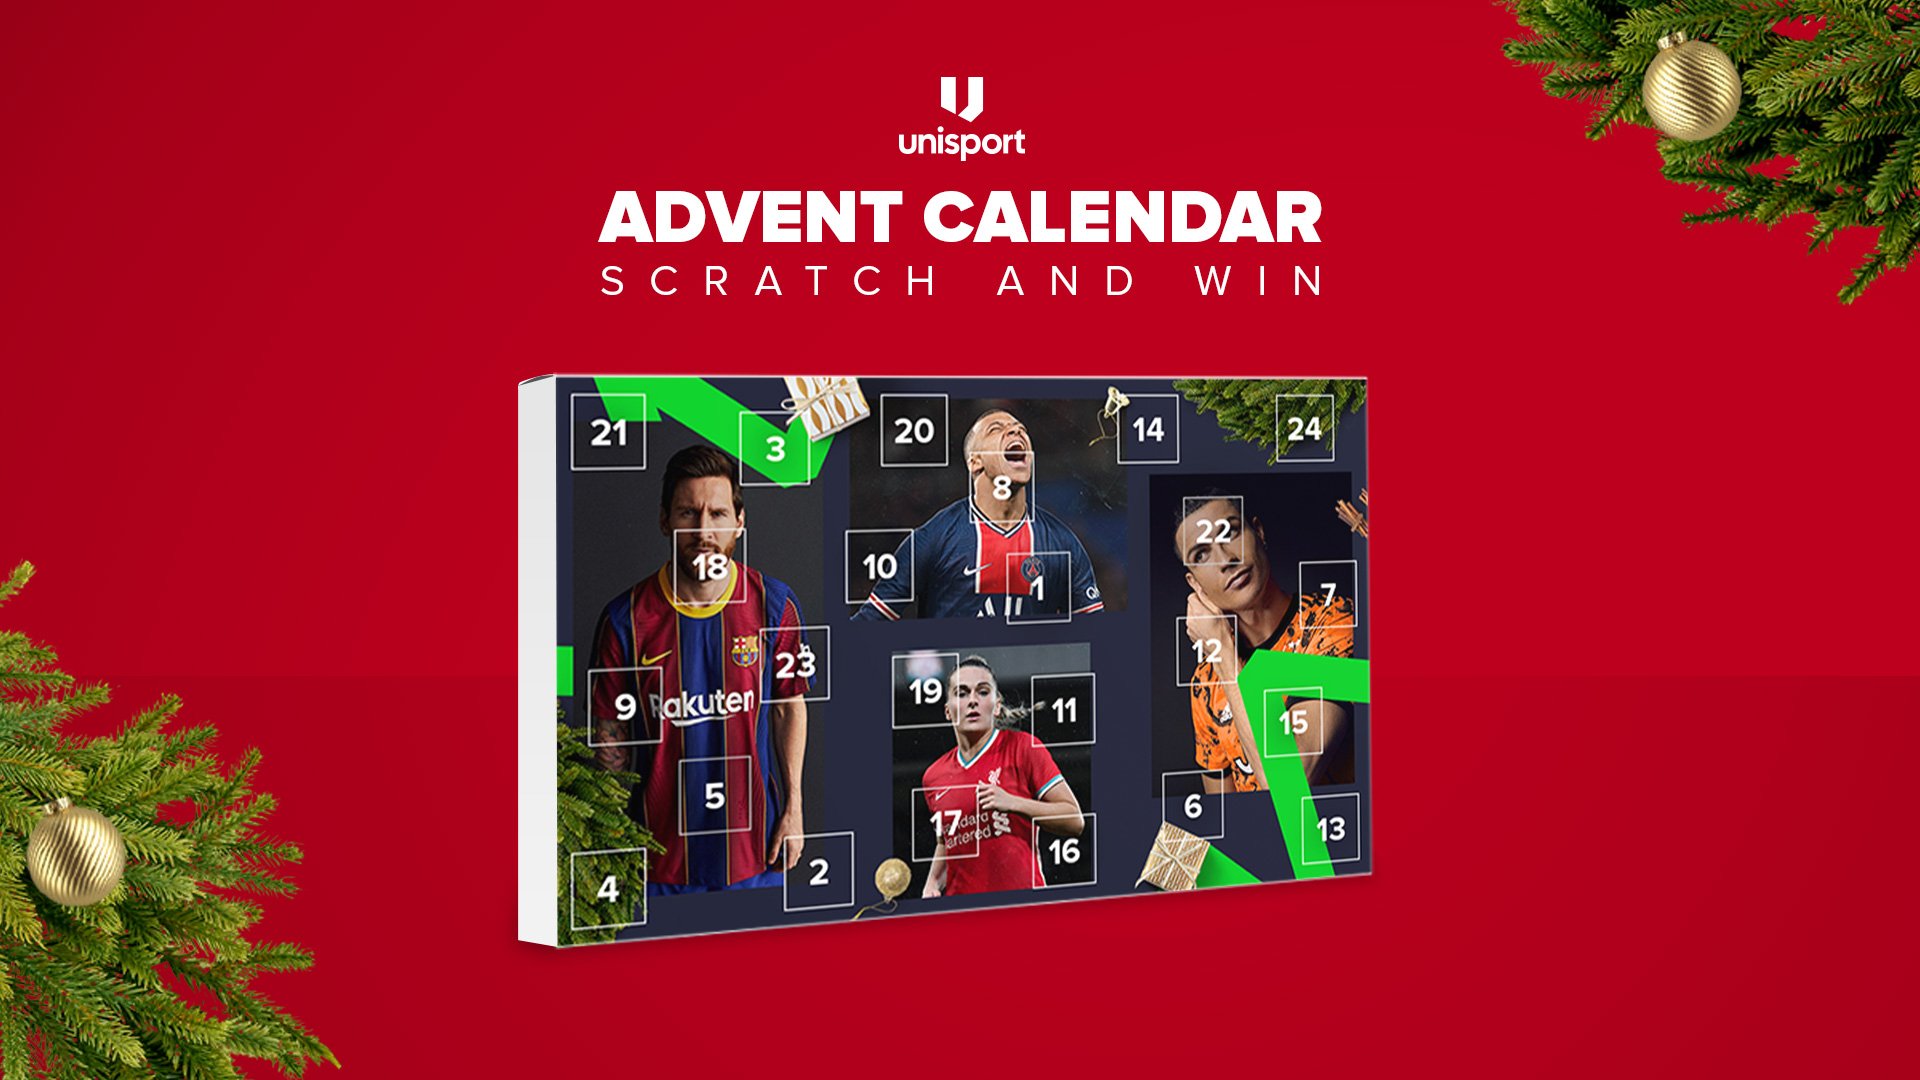 Win Great Football Gifts in Unisport's Advent Calendar